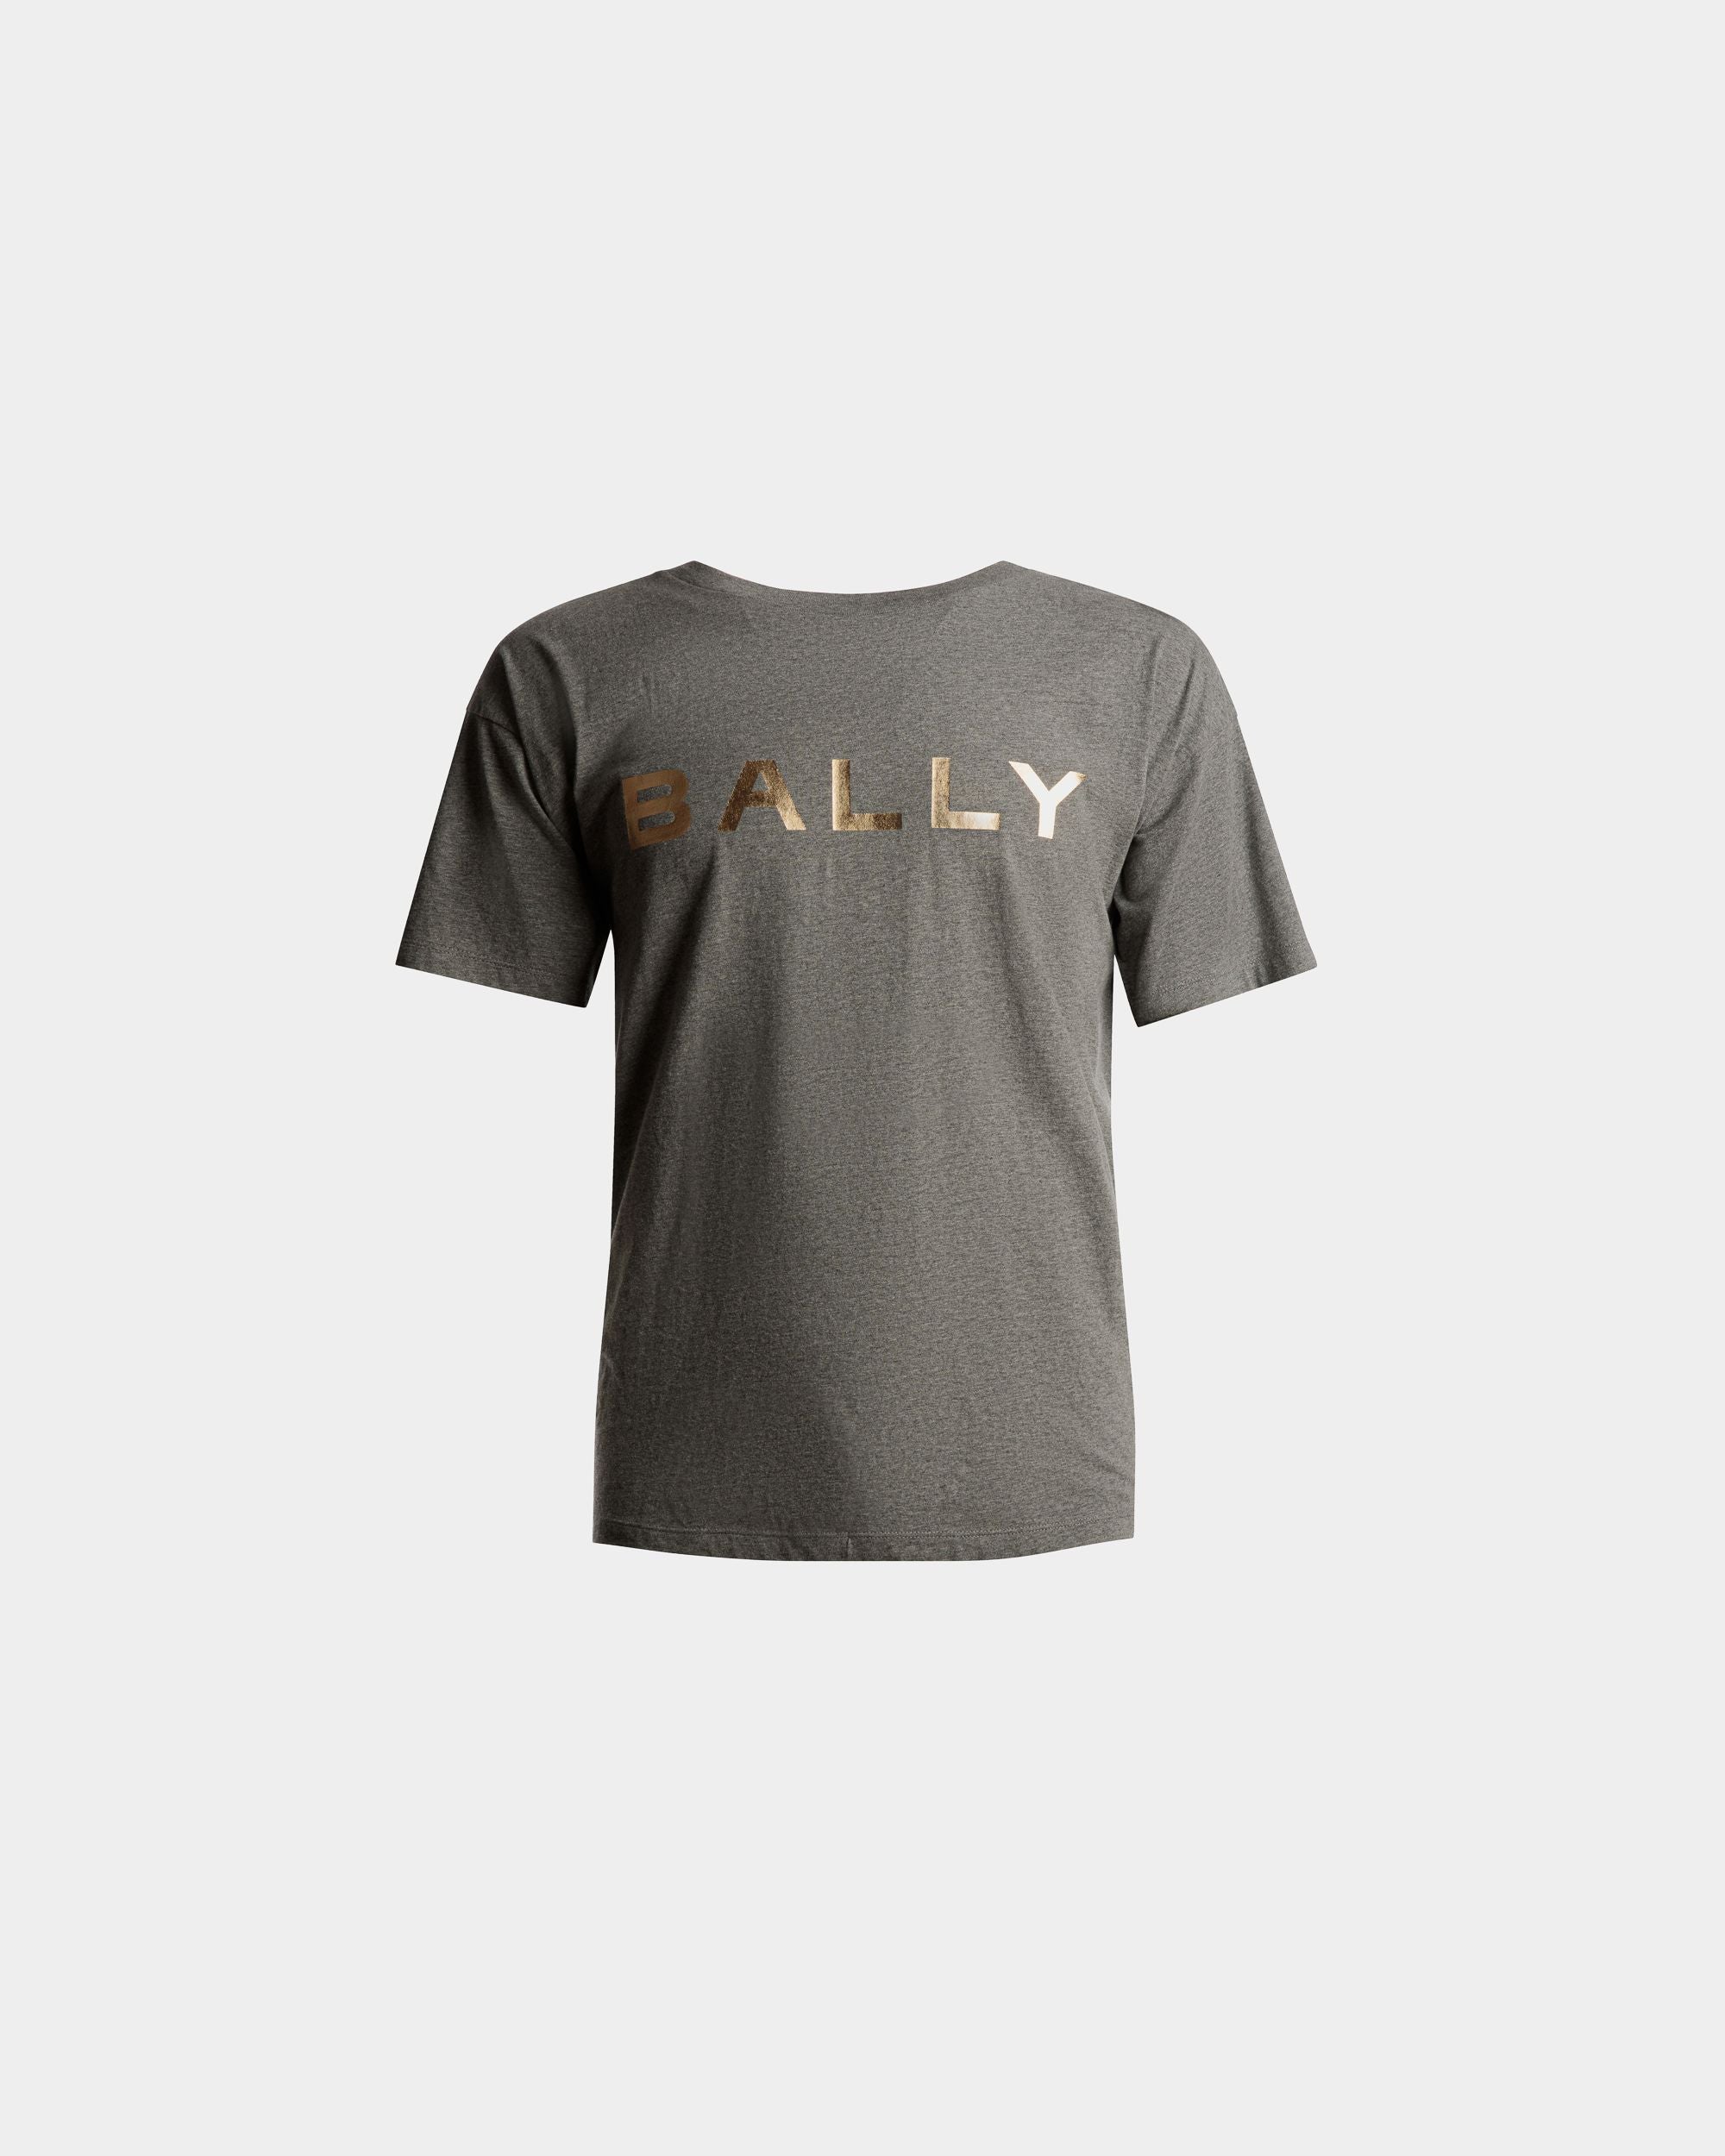 Men's Logo T-Shirt In Grey Melange Cotton | Bally | Still Life Front